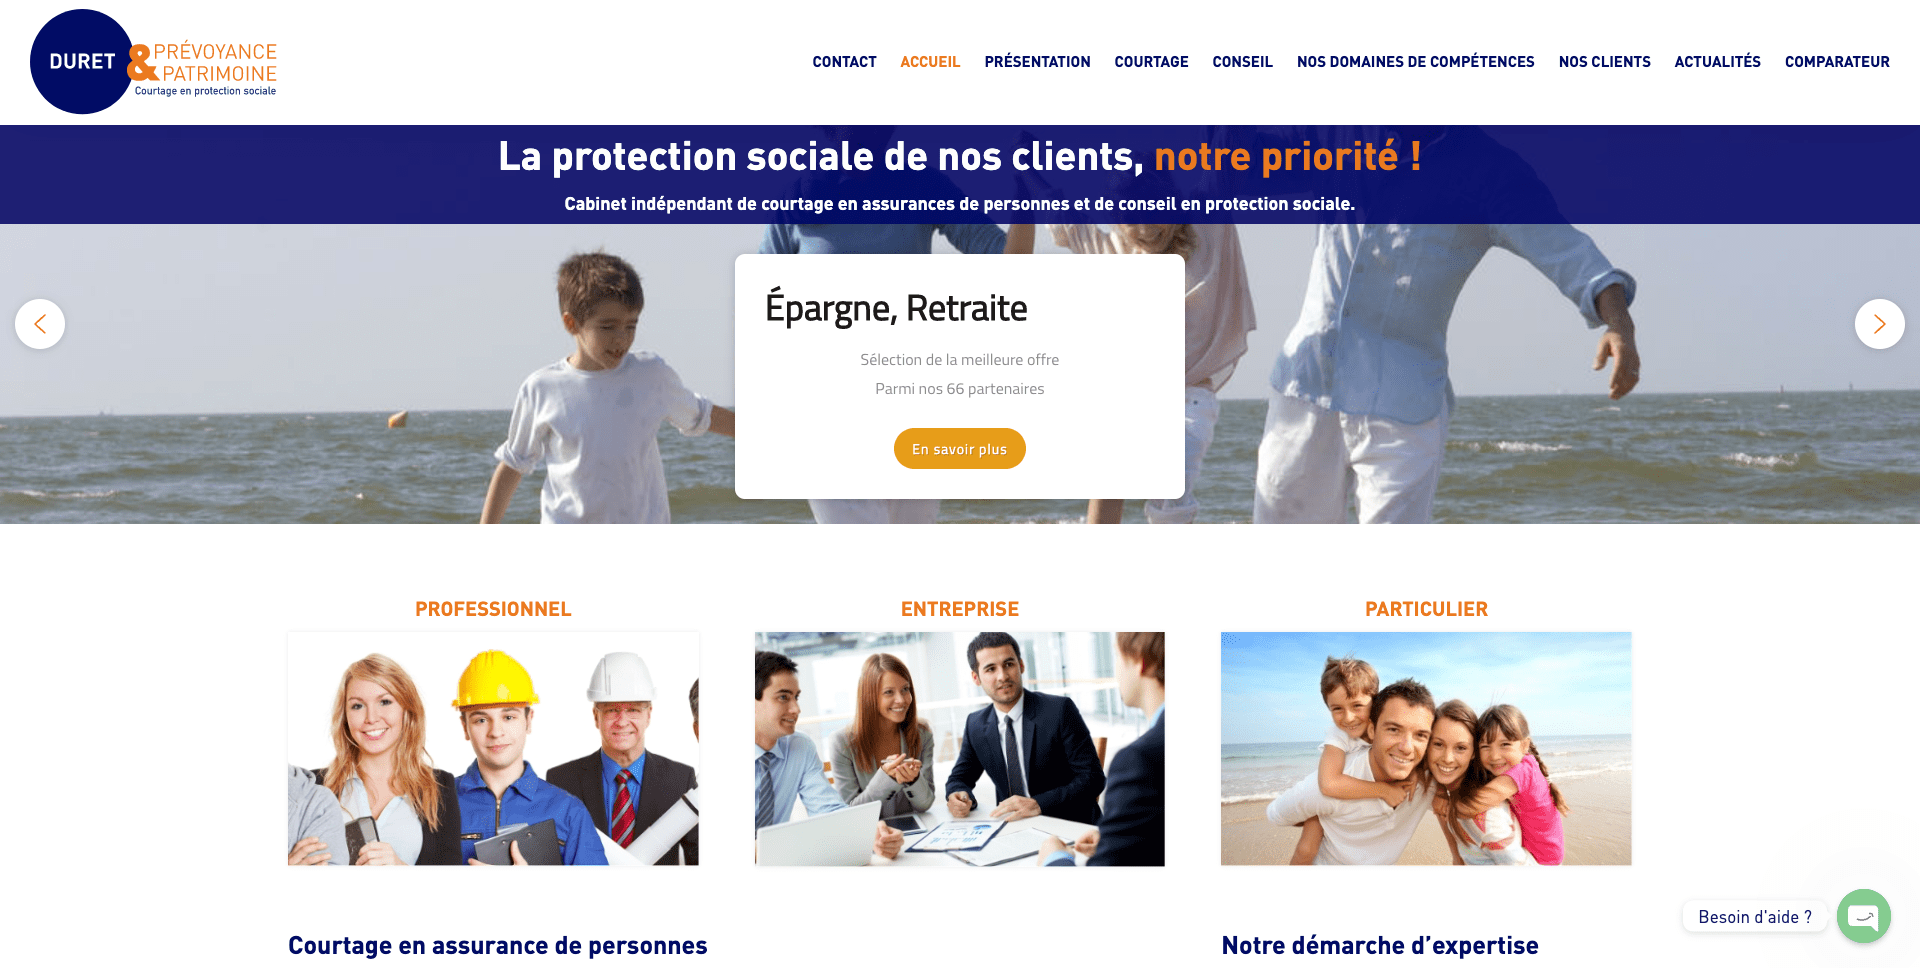 Site wordpress Duret prévoyance & patrimoine